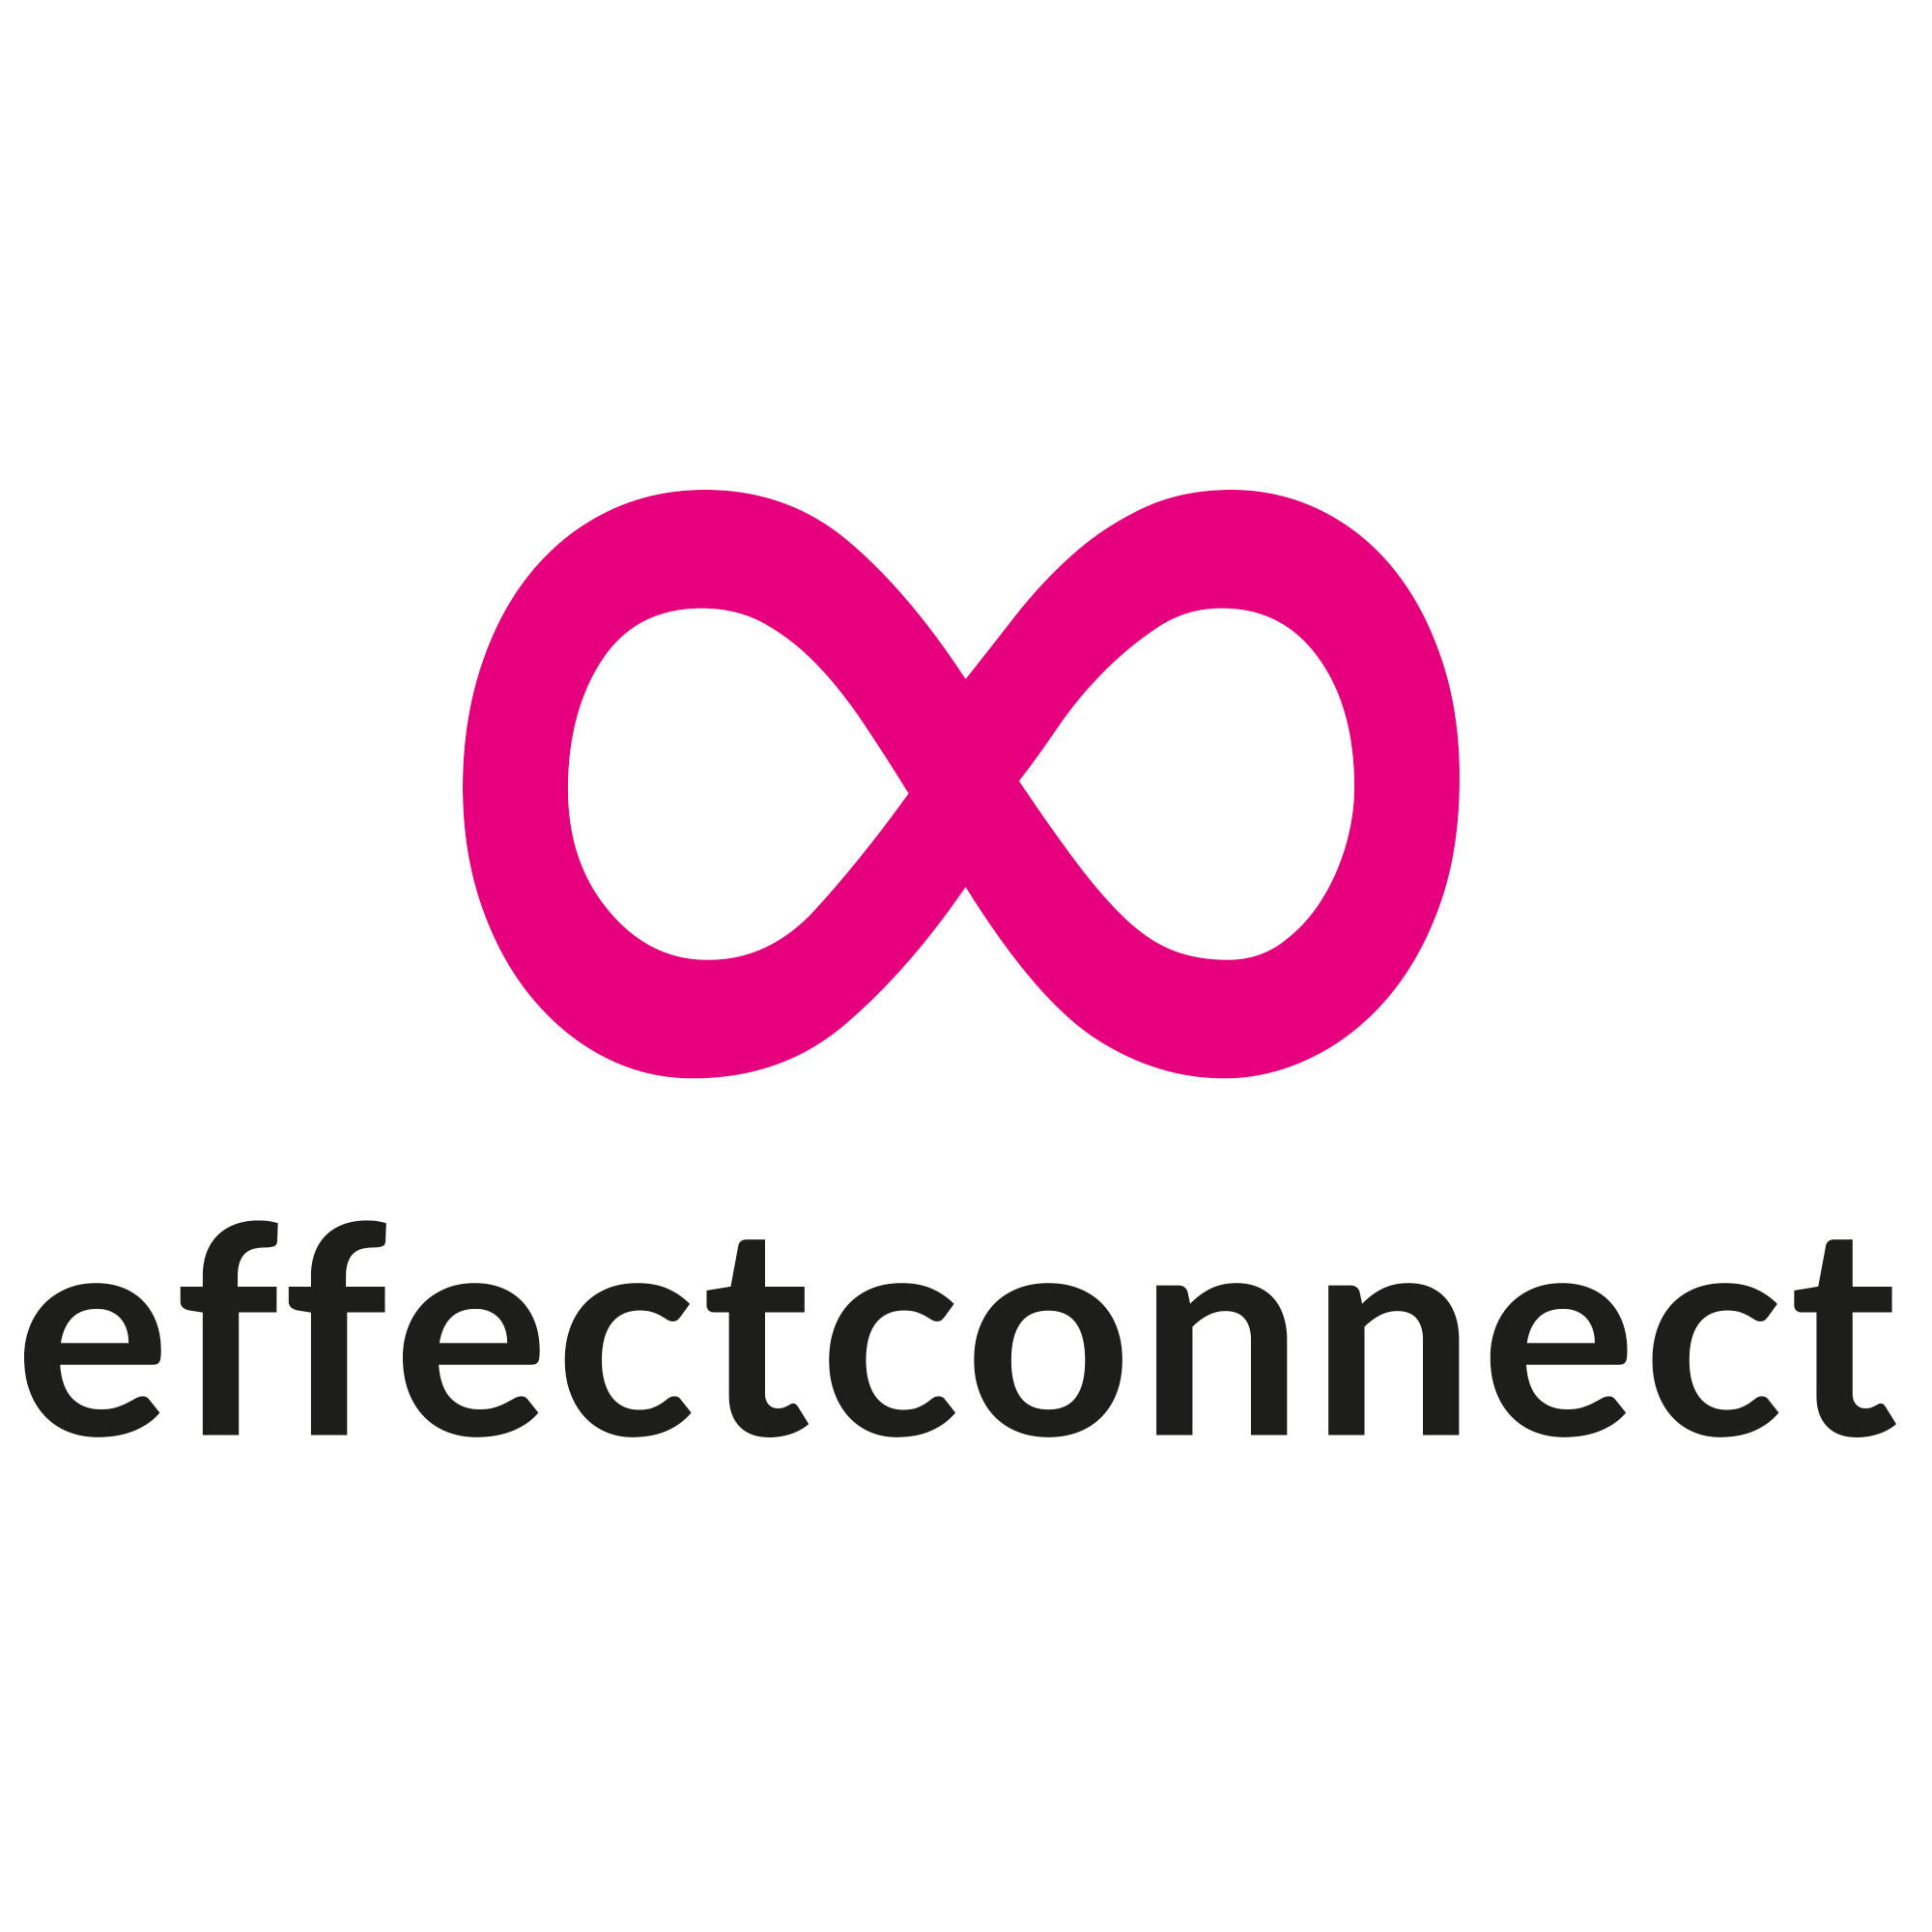 EffectConnect